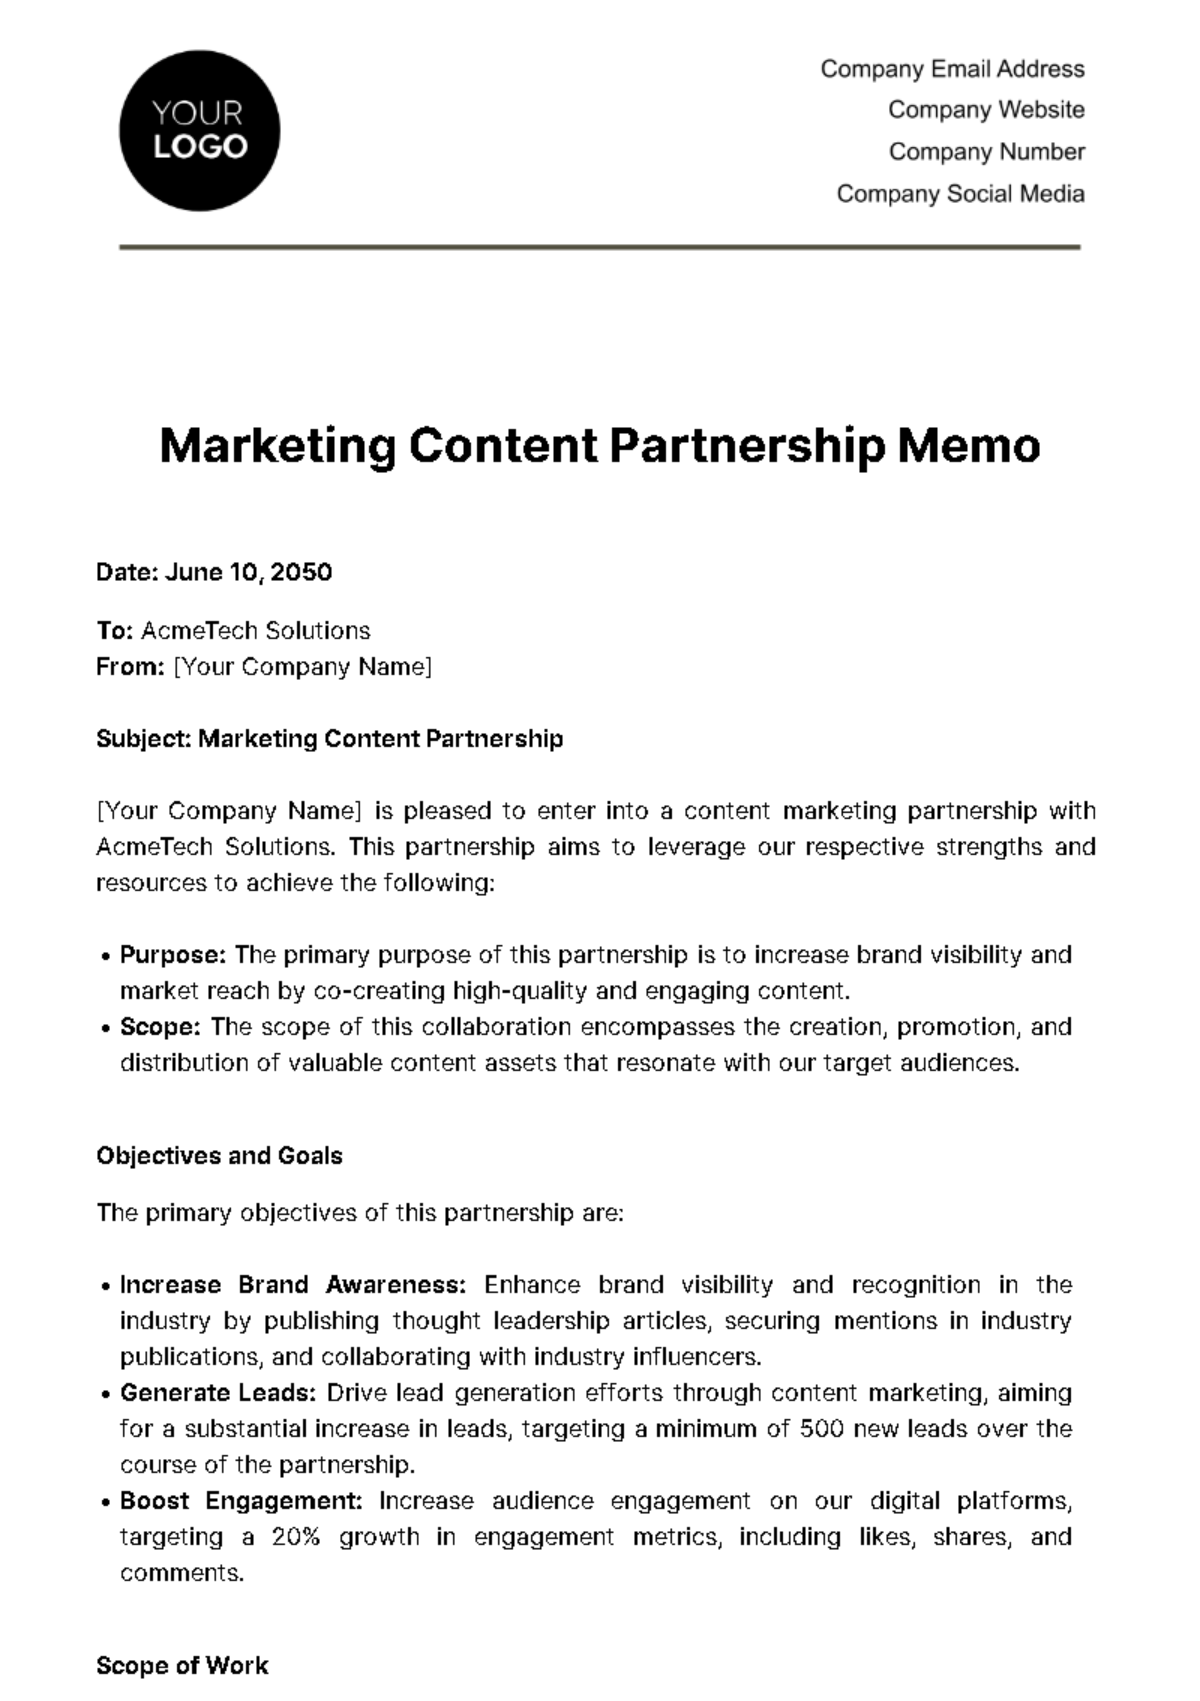 Free Marketing Content Partnership Memo Template